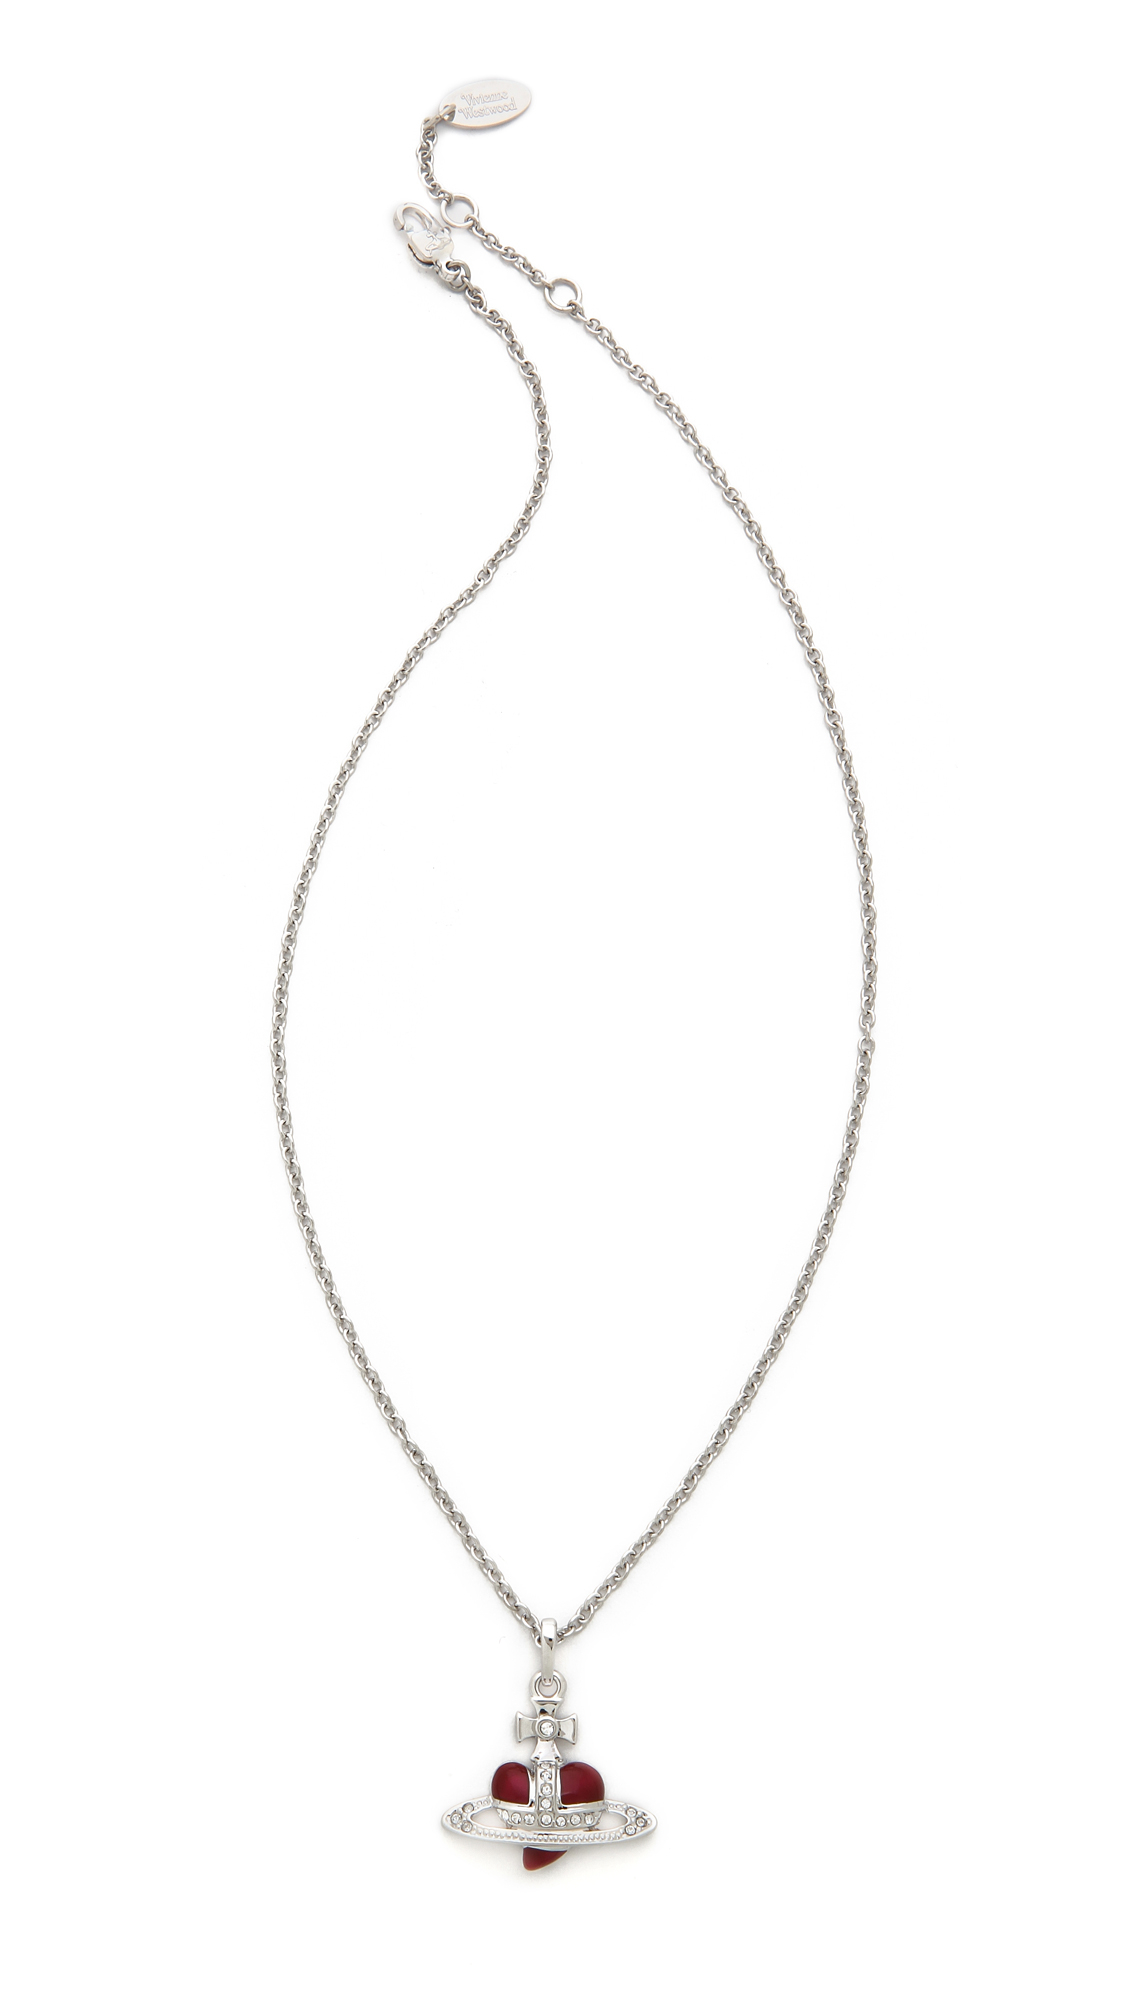 Lyst - Vivienne Westwood Heart Orbit Necklace in Metallic